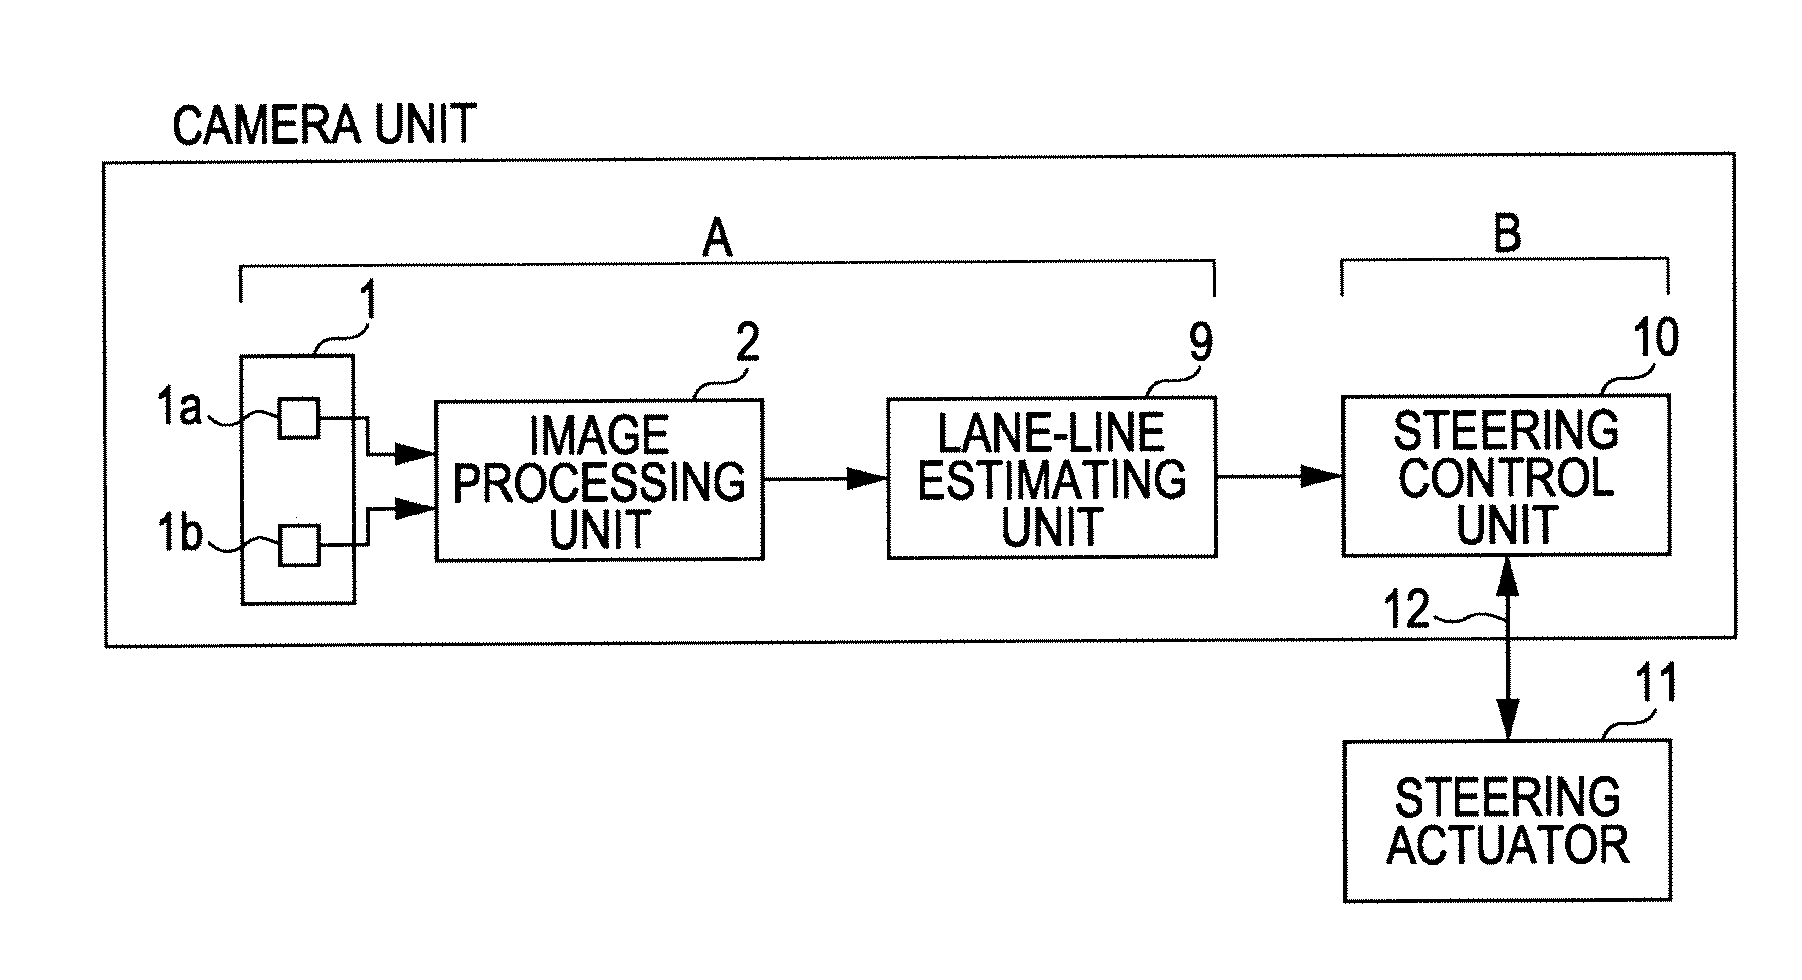 Lane line estimating apparatus